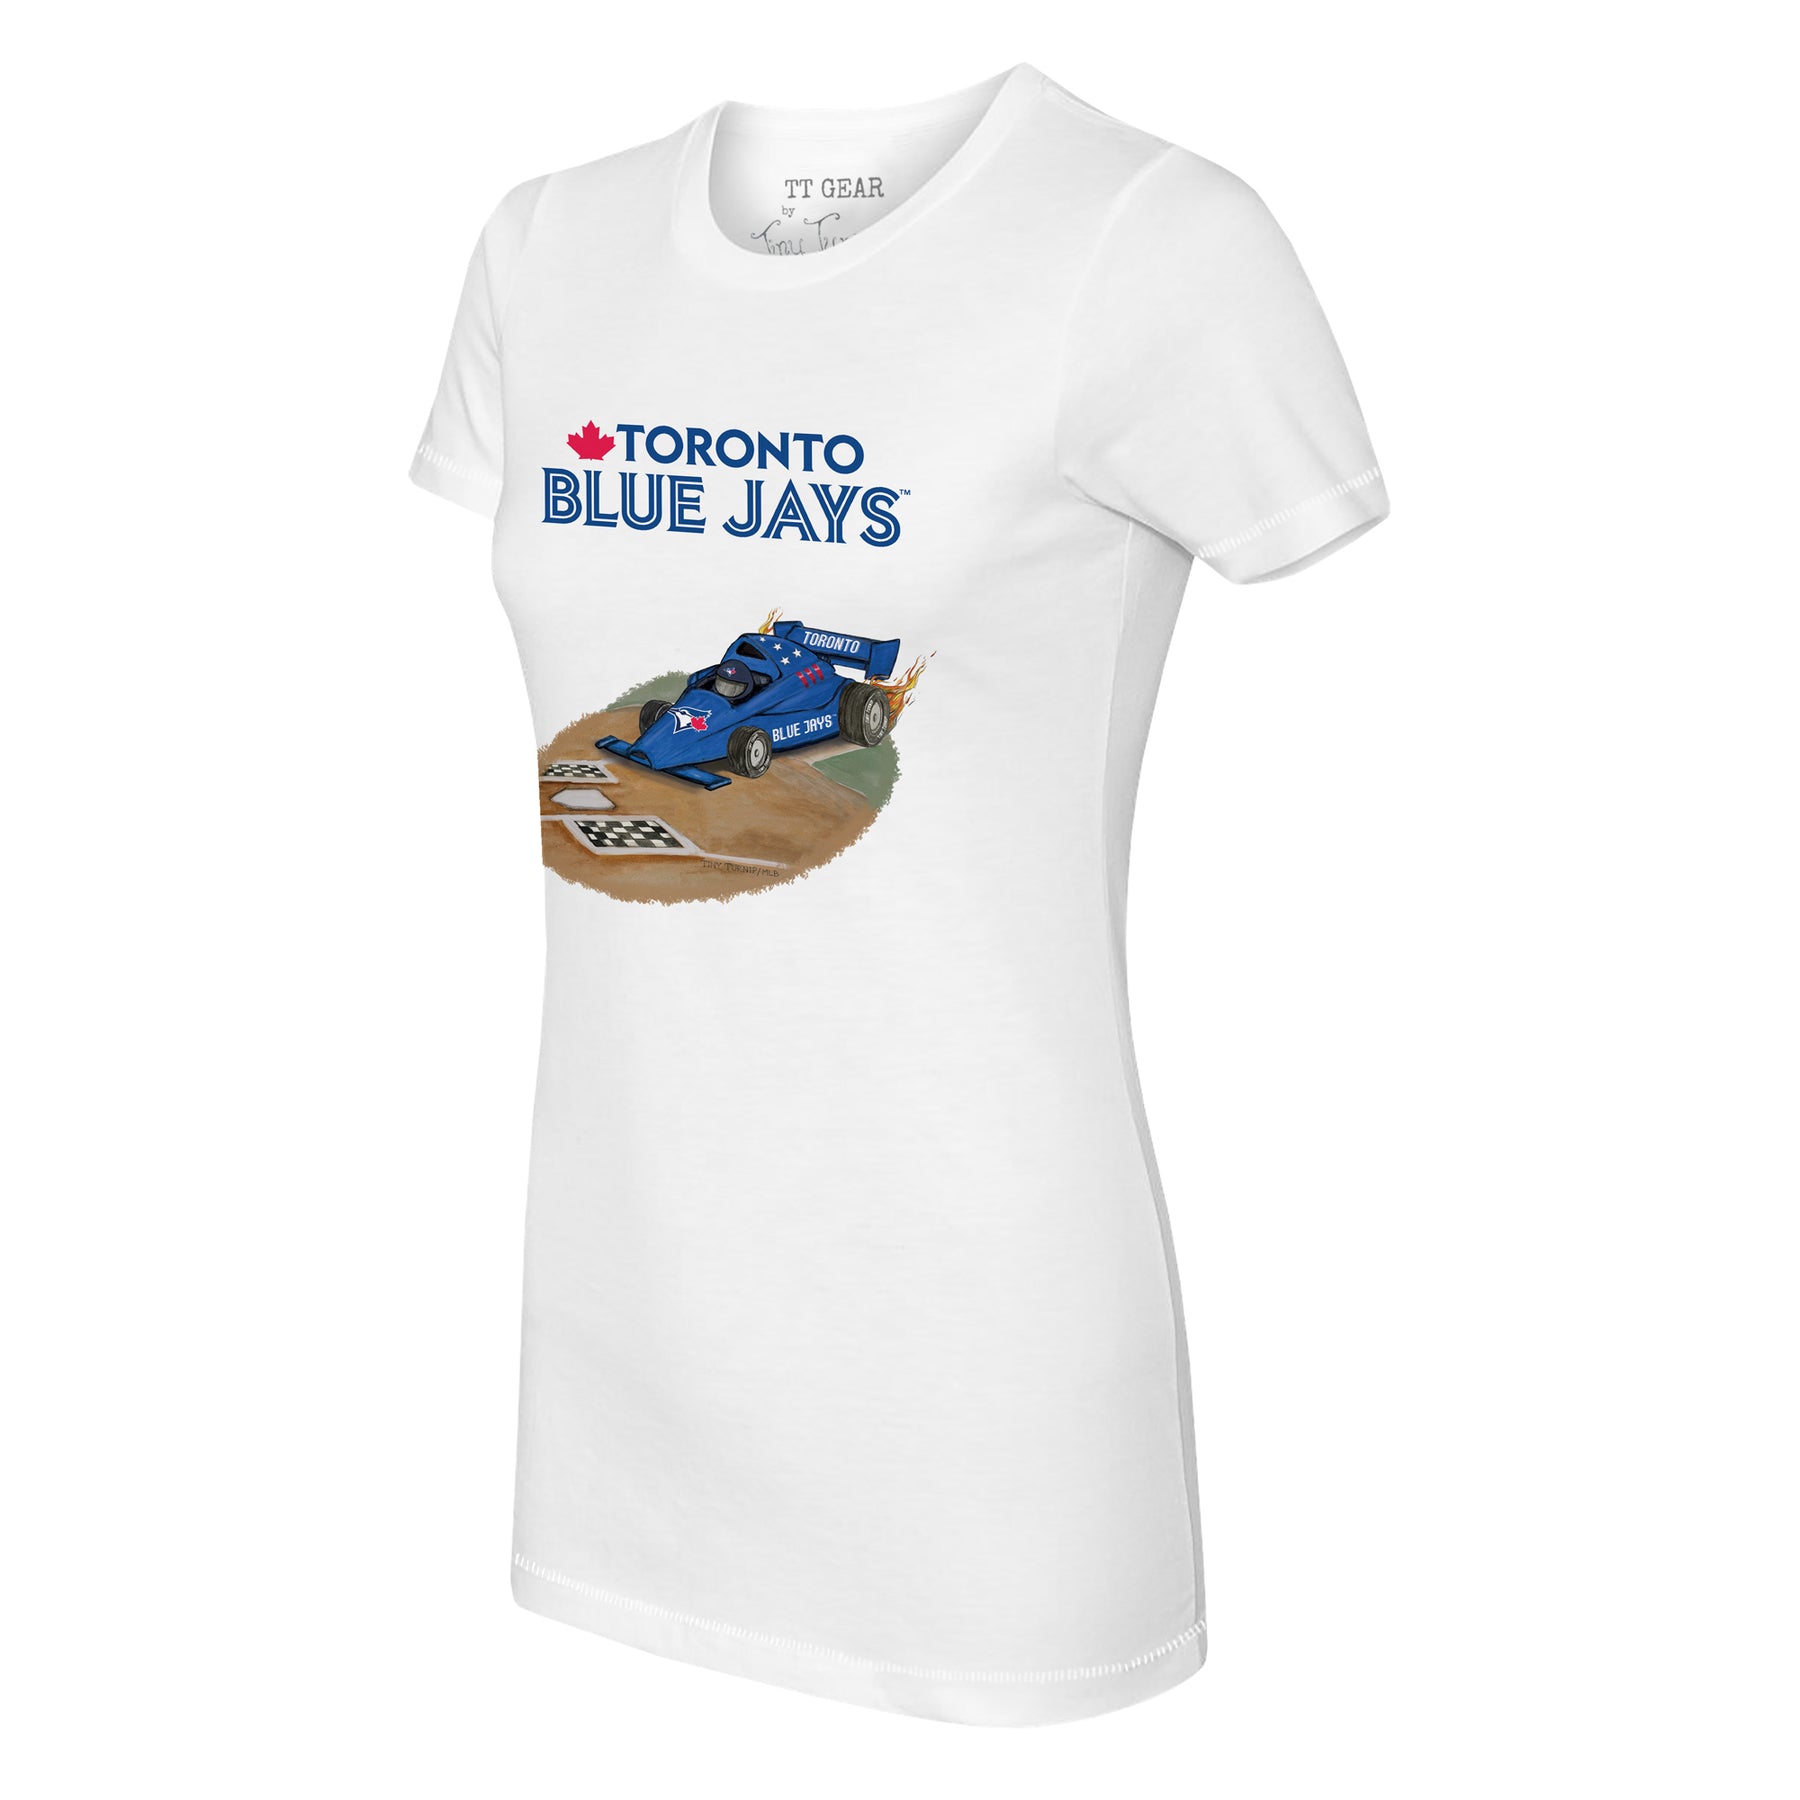 Toronto Blue Jays Race Car Tee Shirt